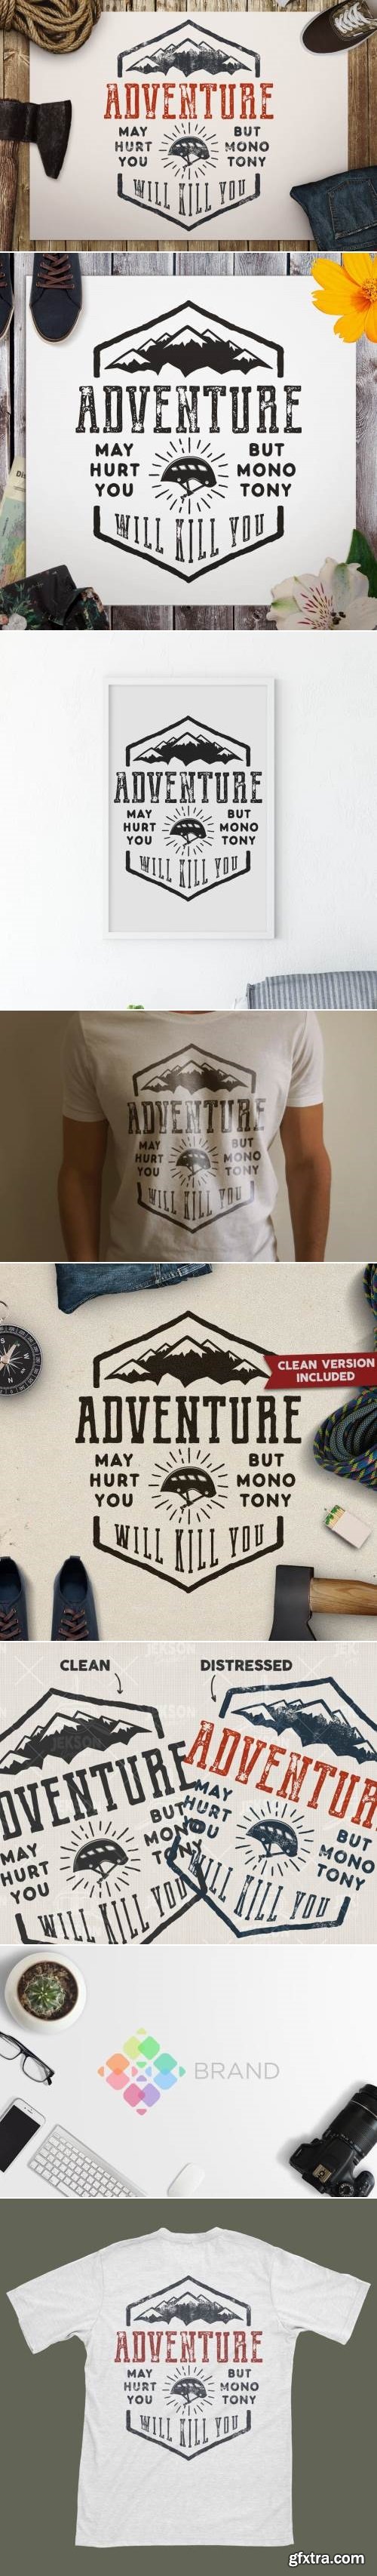 Great Adventure Print / Retro Camping Badge